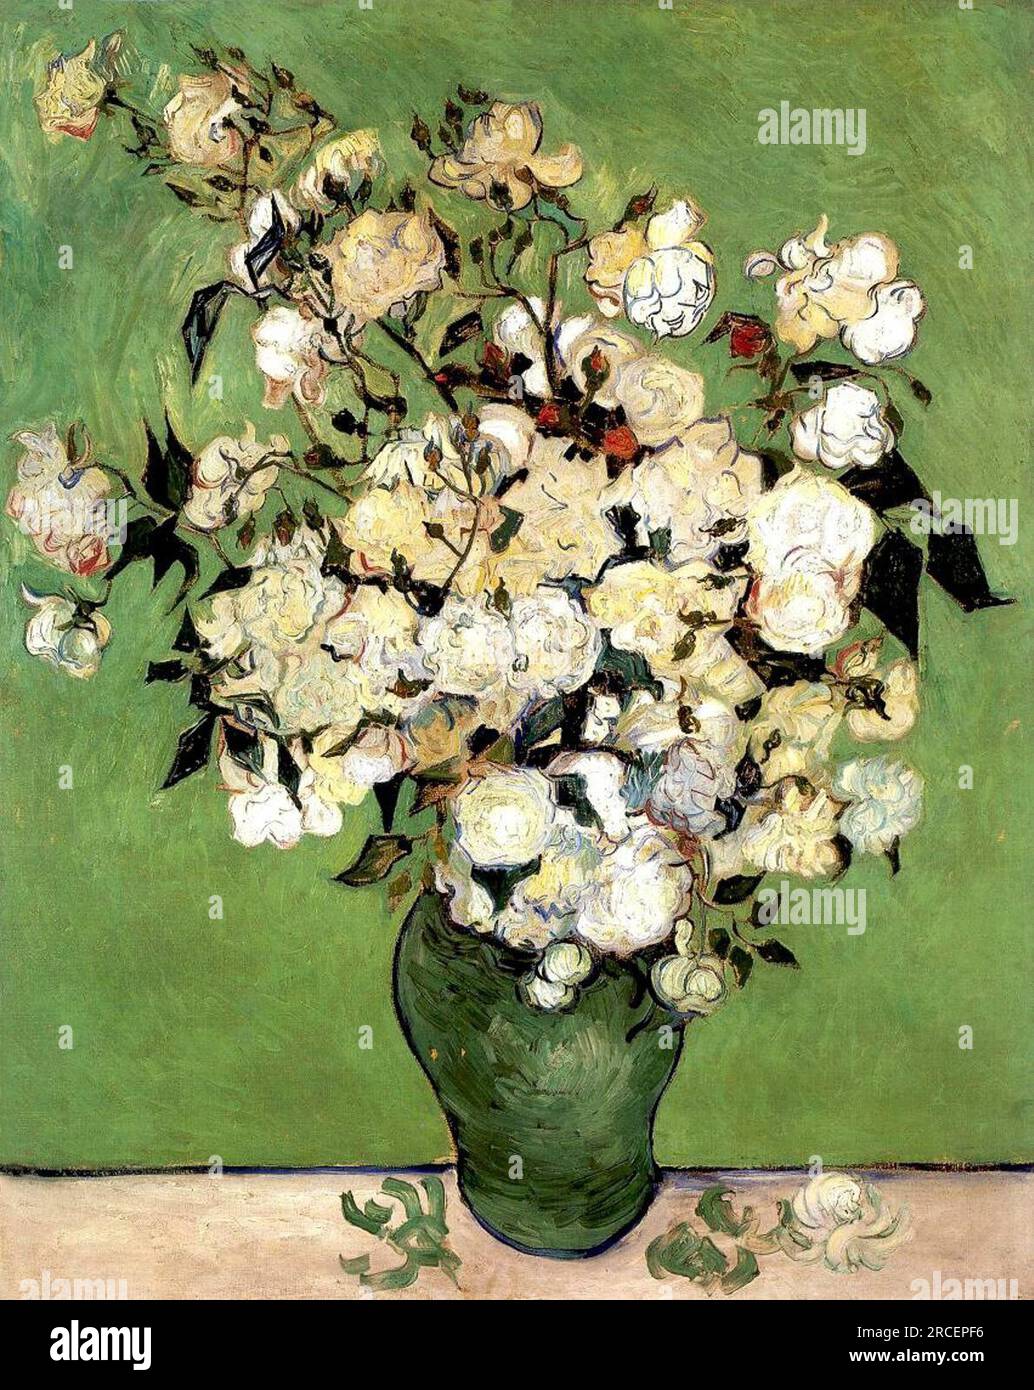 Un vase de Roses 1890 ; France de Vincent van Gogh Banque D'Images